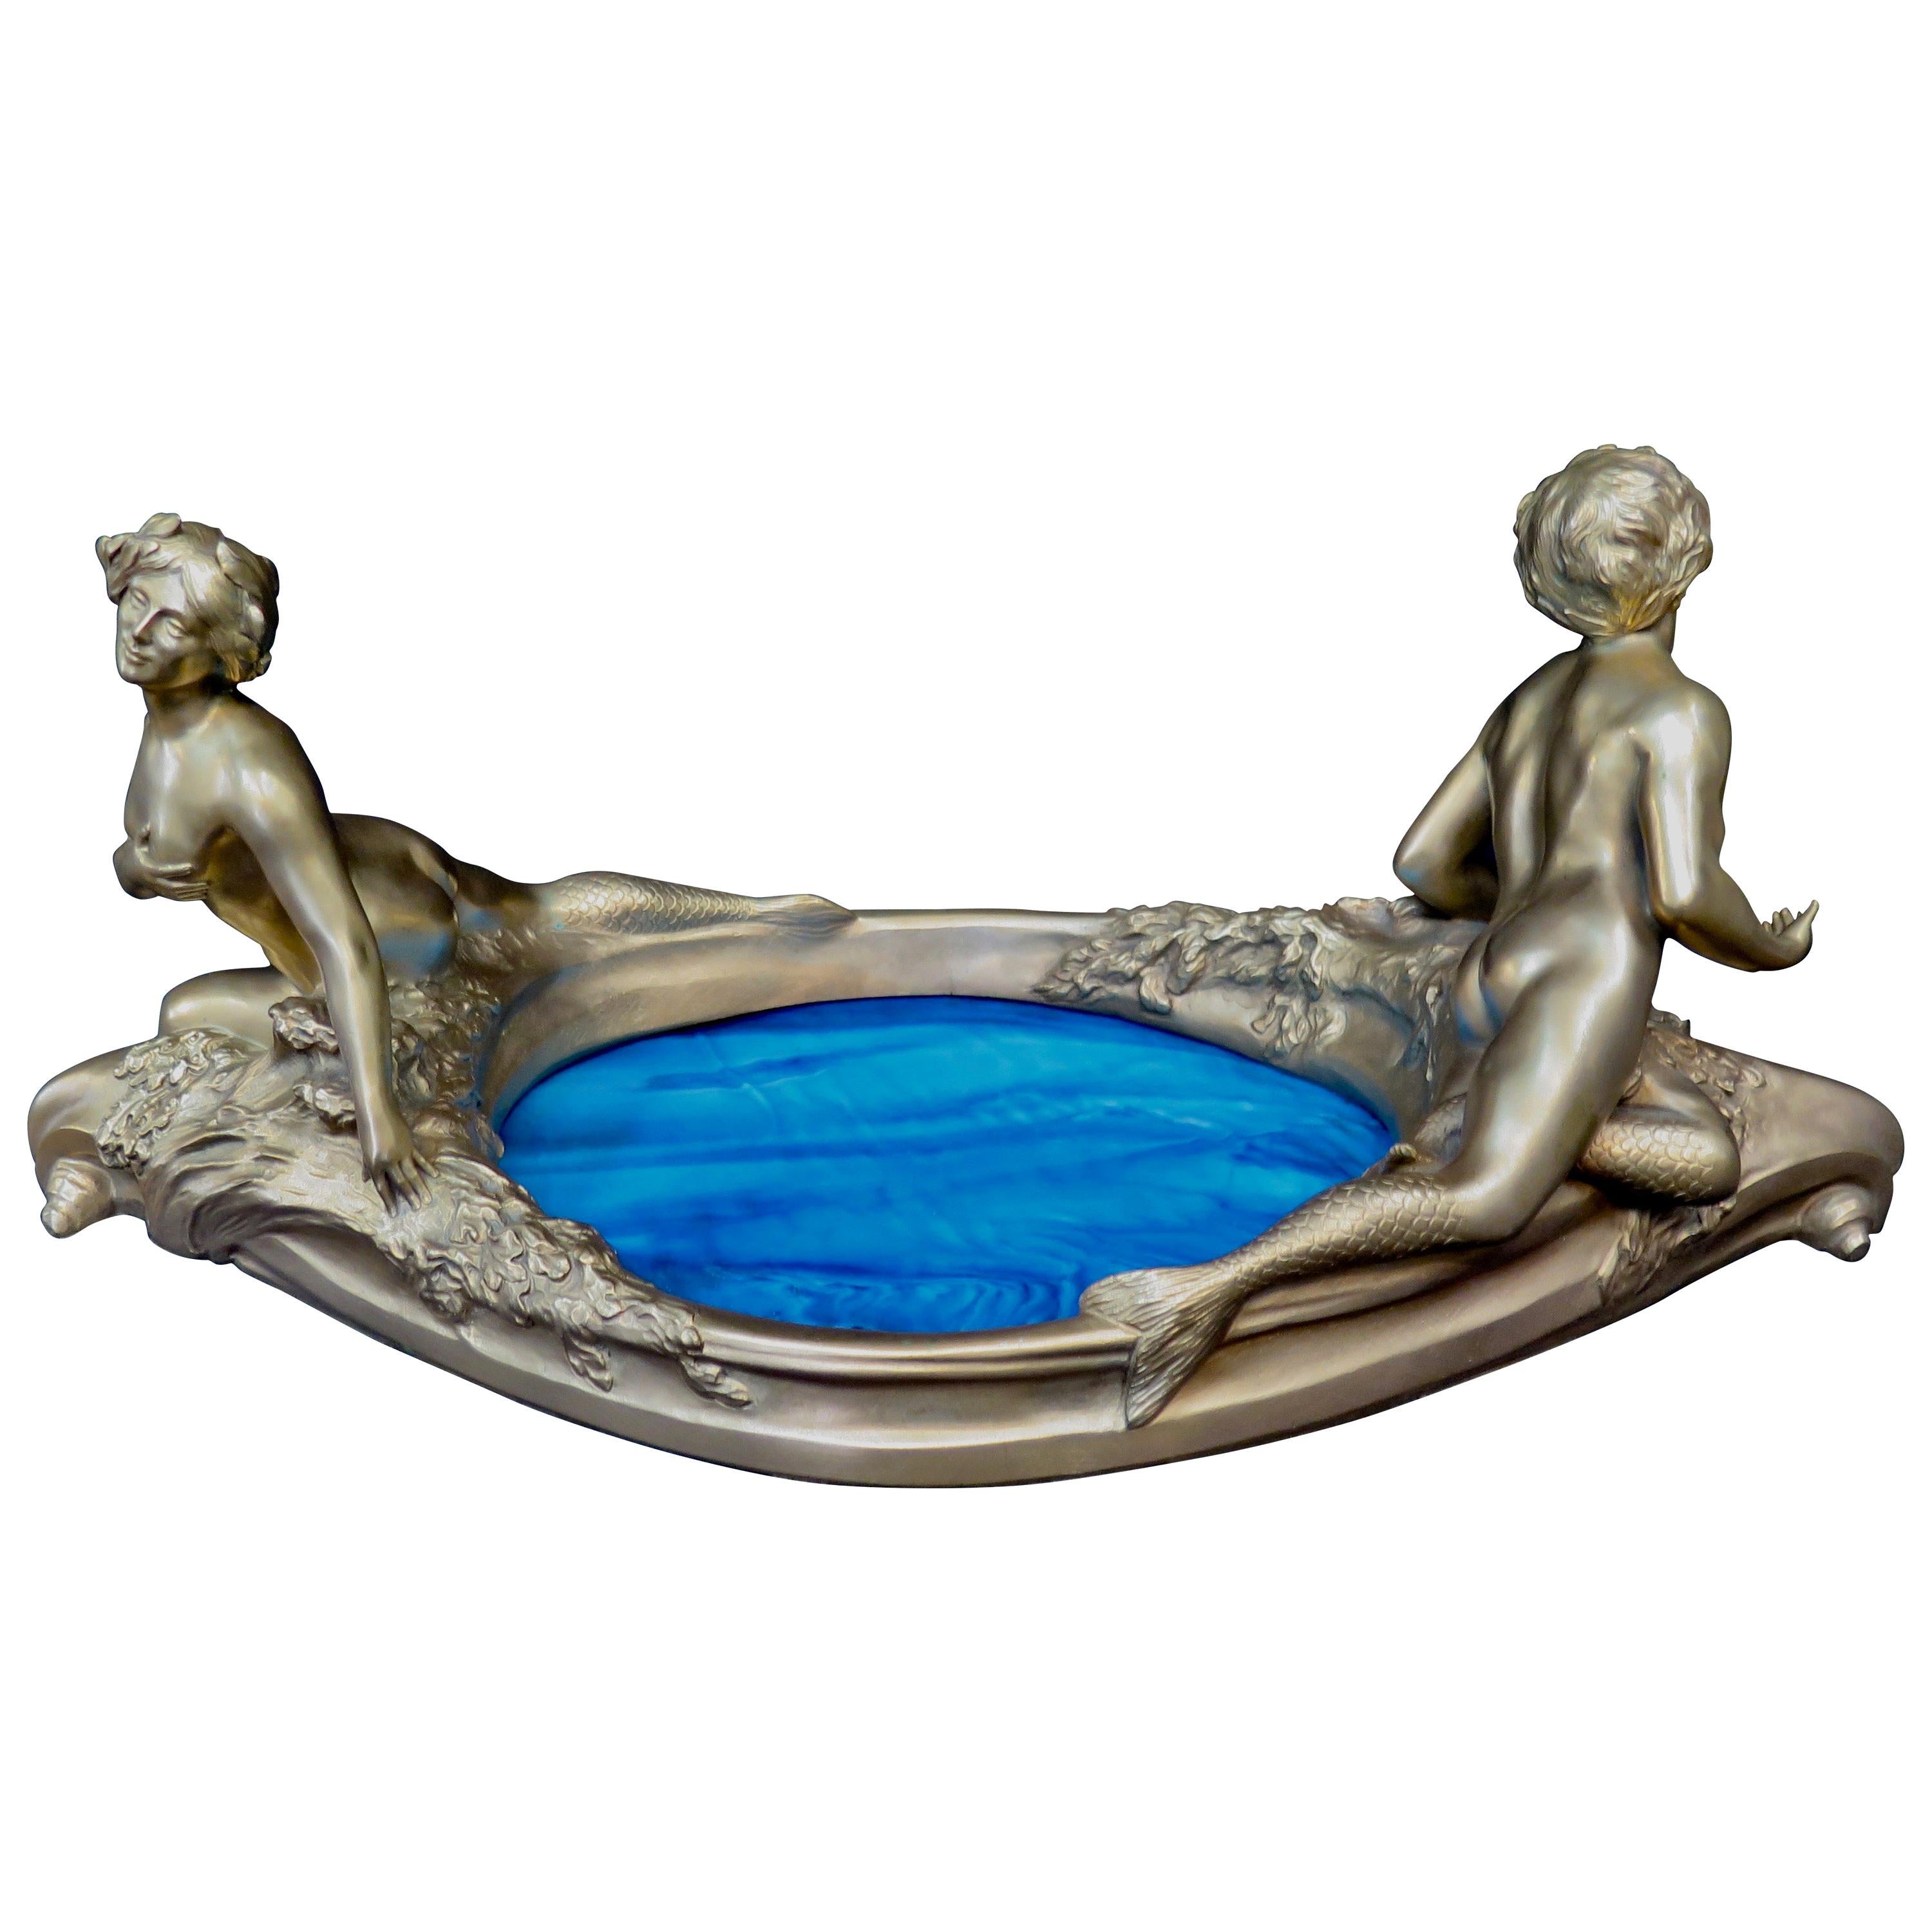 Art Nouveau Period Mythological Bronze Centerpiece